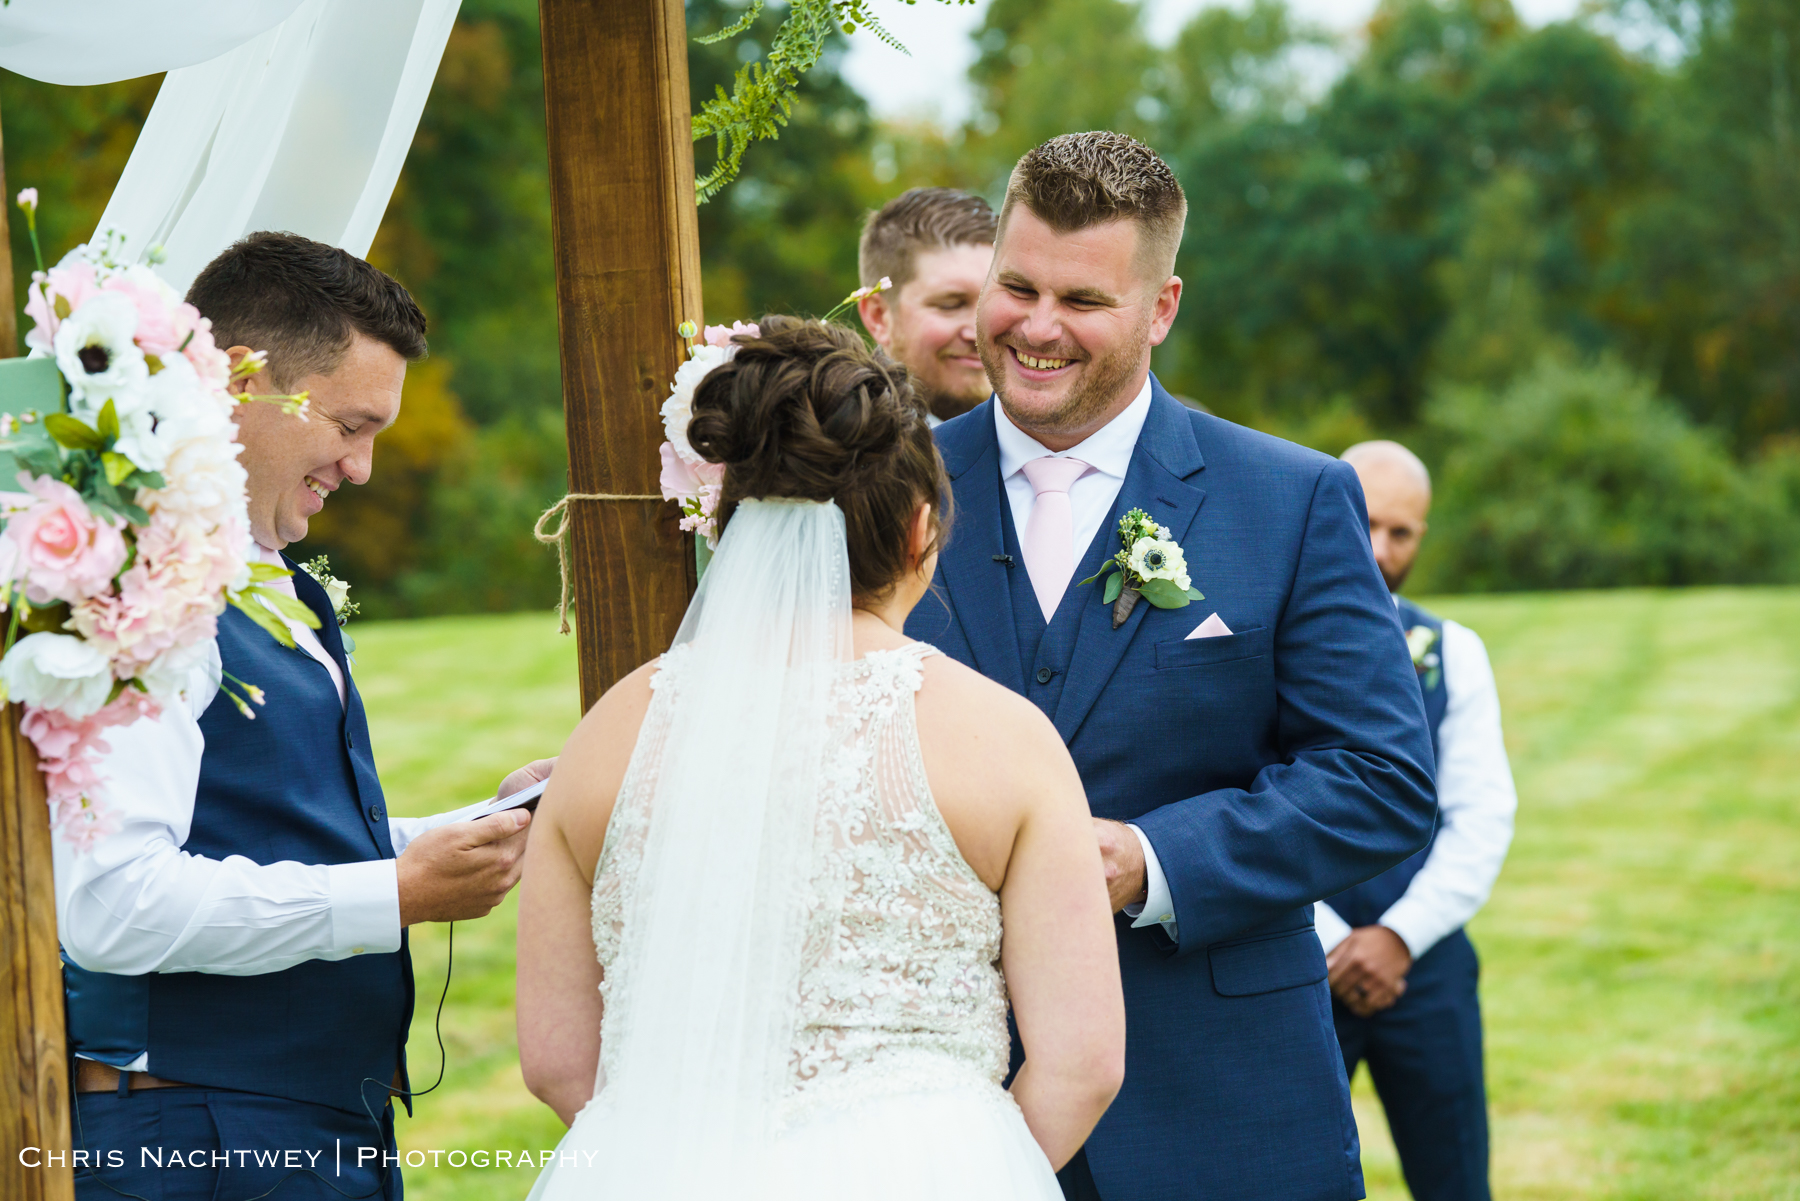 wedding-photographers-connecticut-affordable-chris-nachtwey-photography-2019-9.jpg